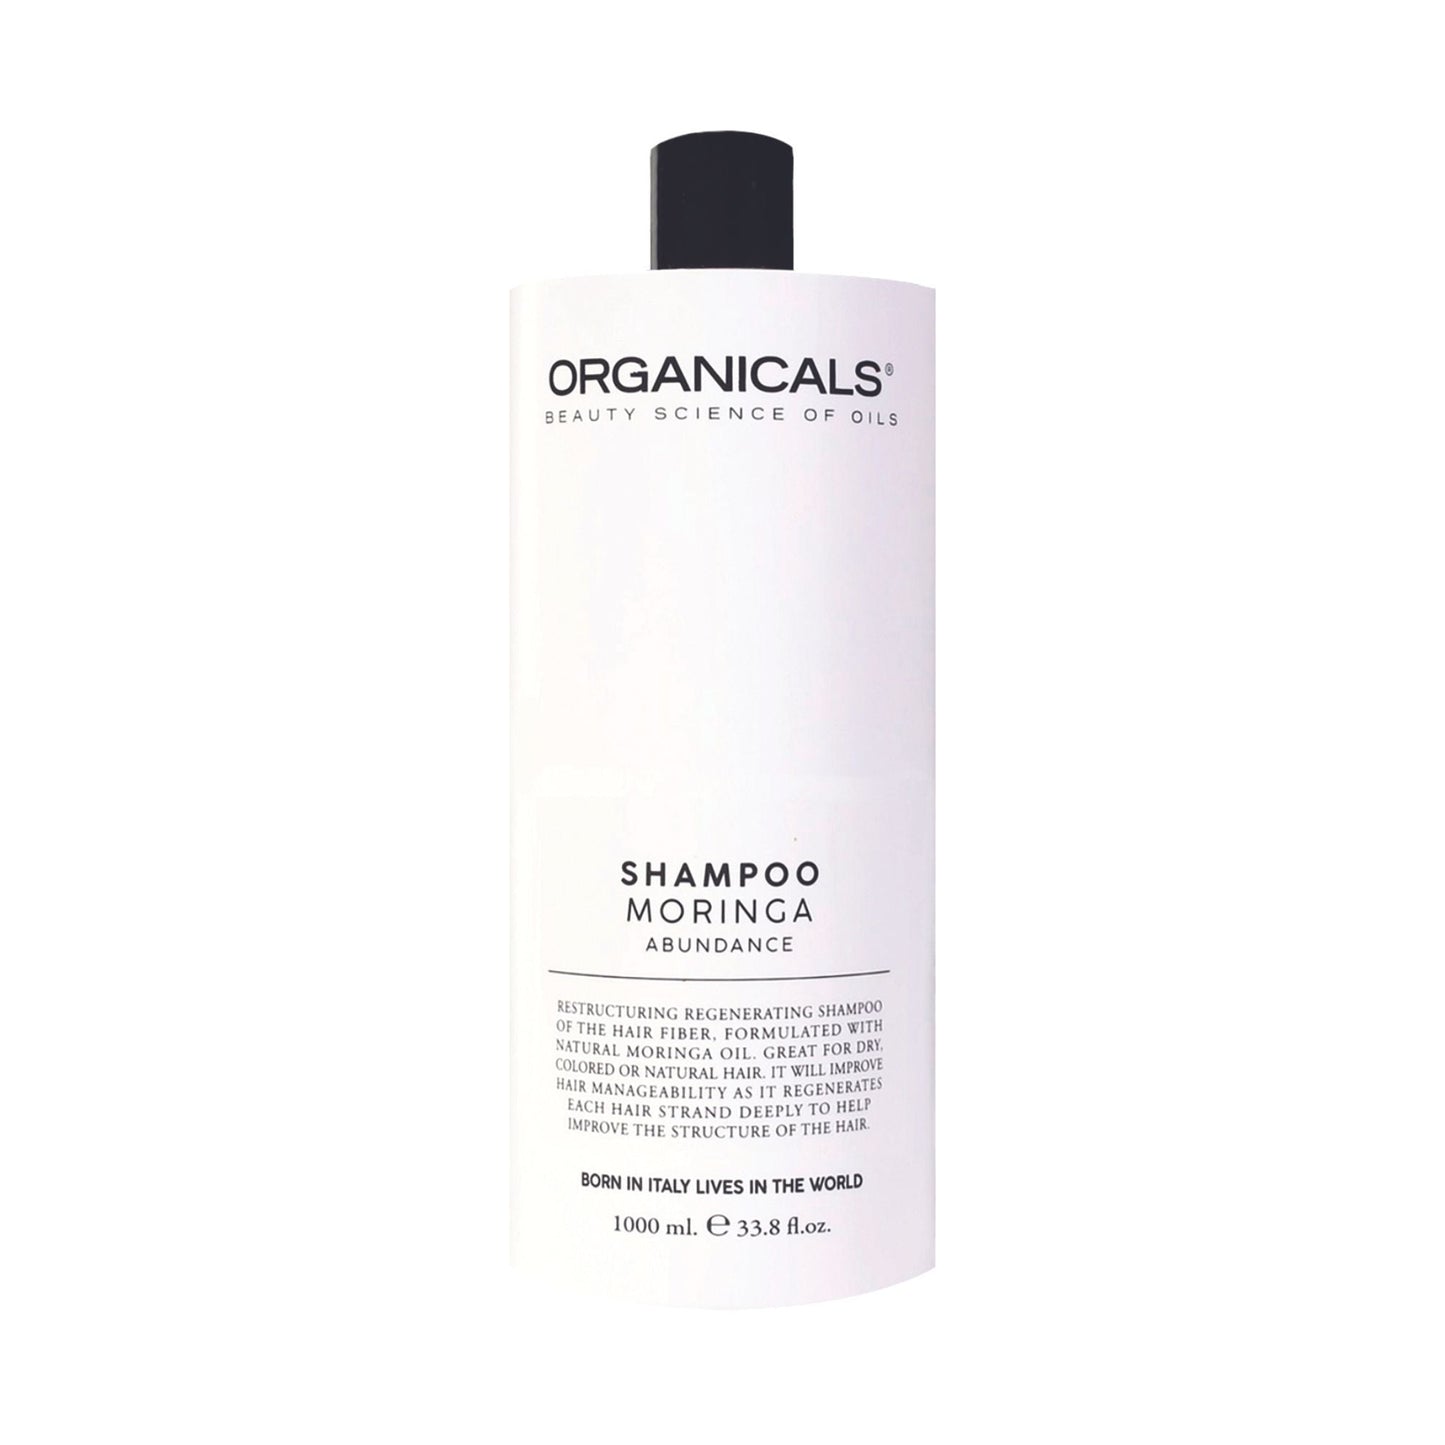 ABUNDANCE Moringa šampon za poškodovane lase ORGANICALS - Šamponi.si